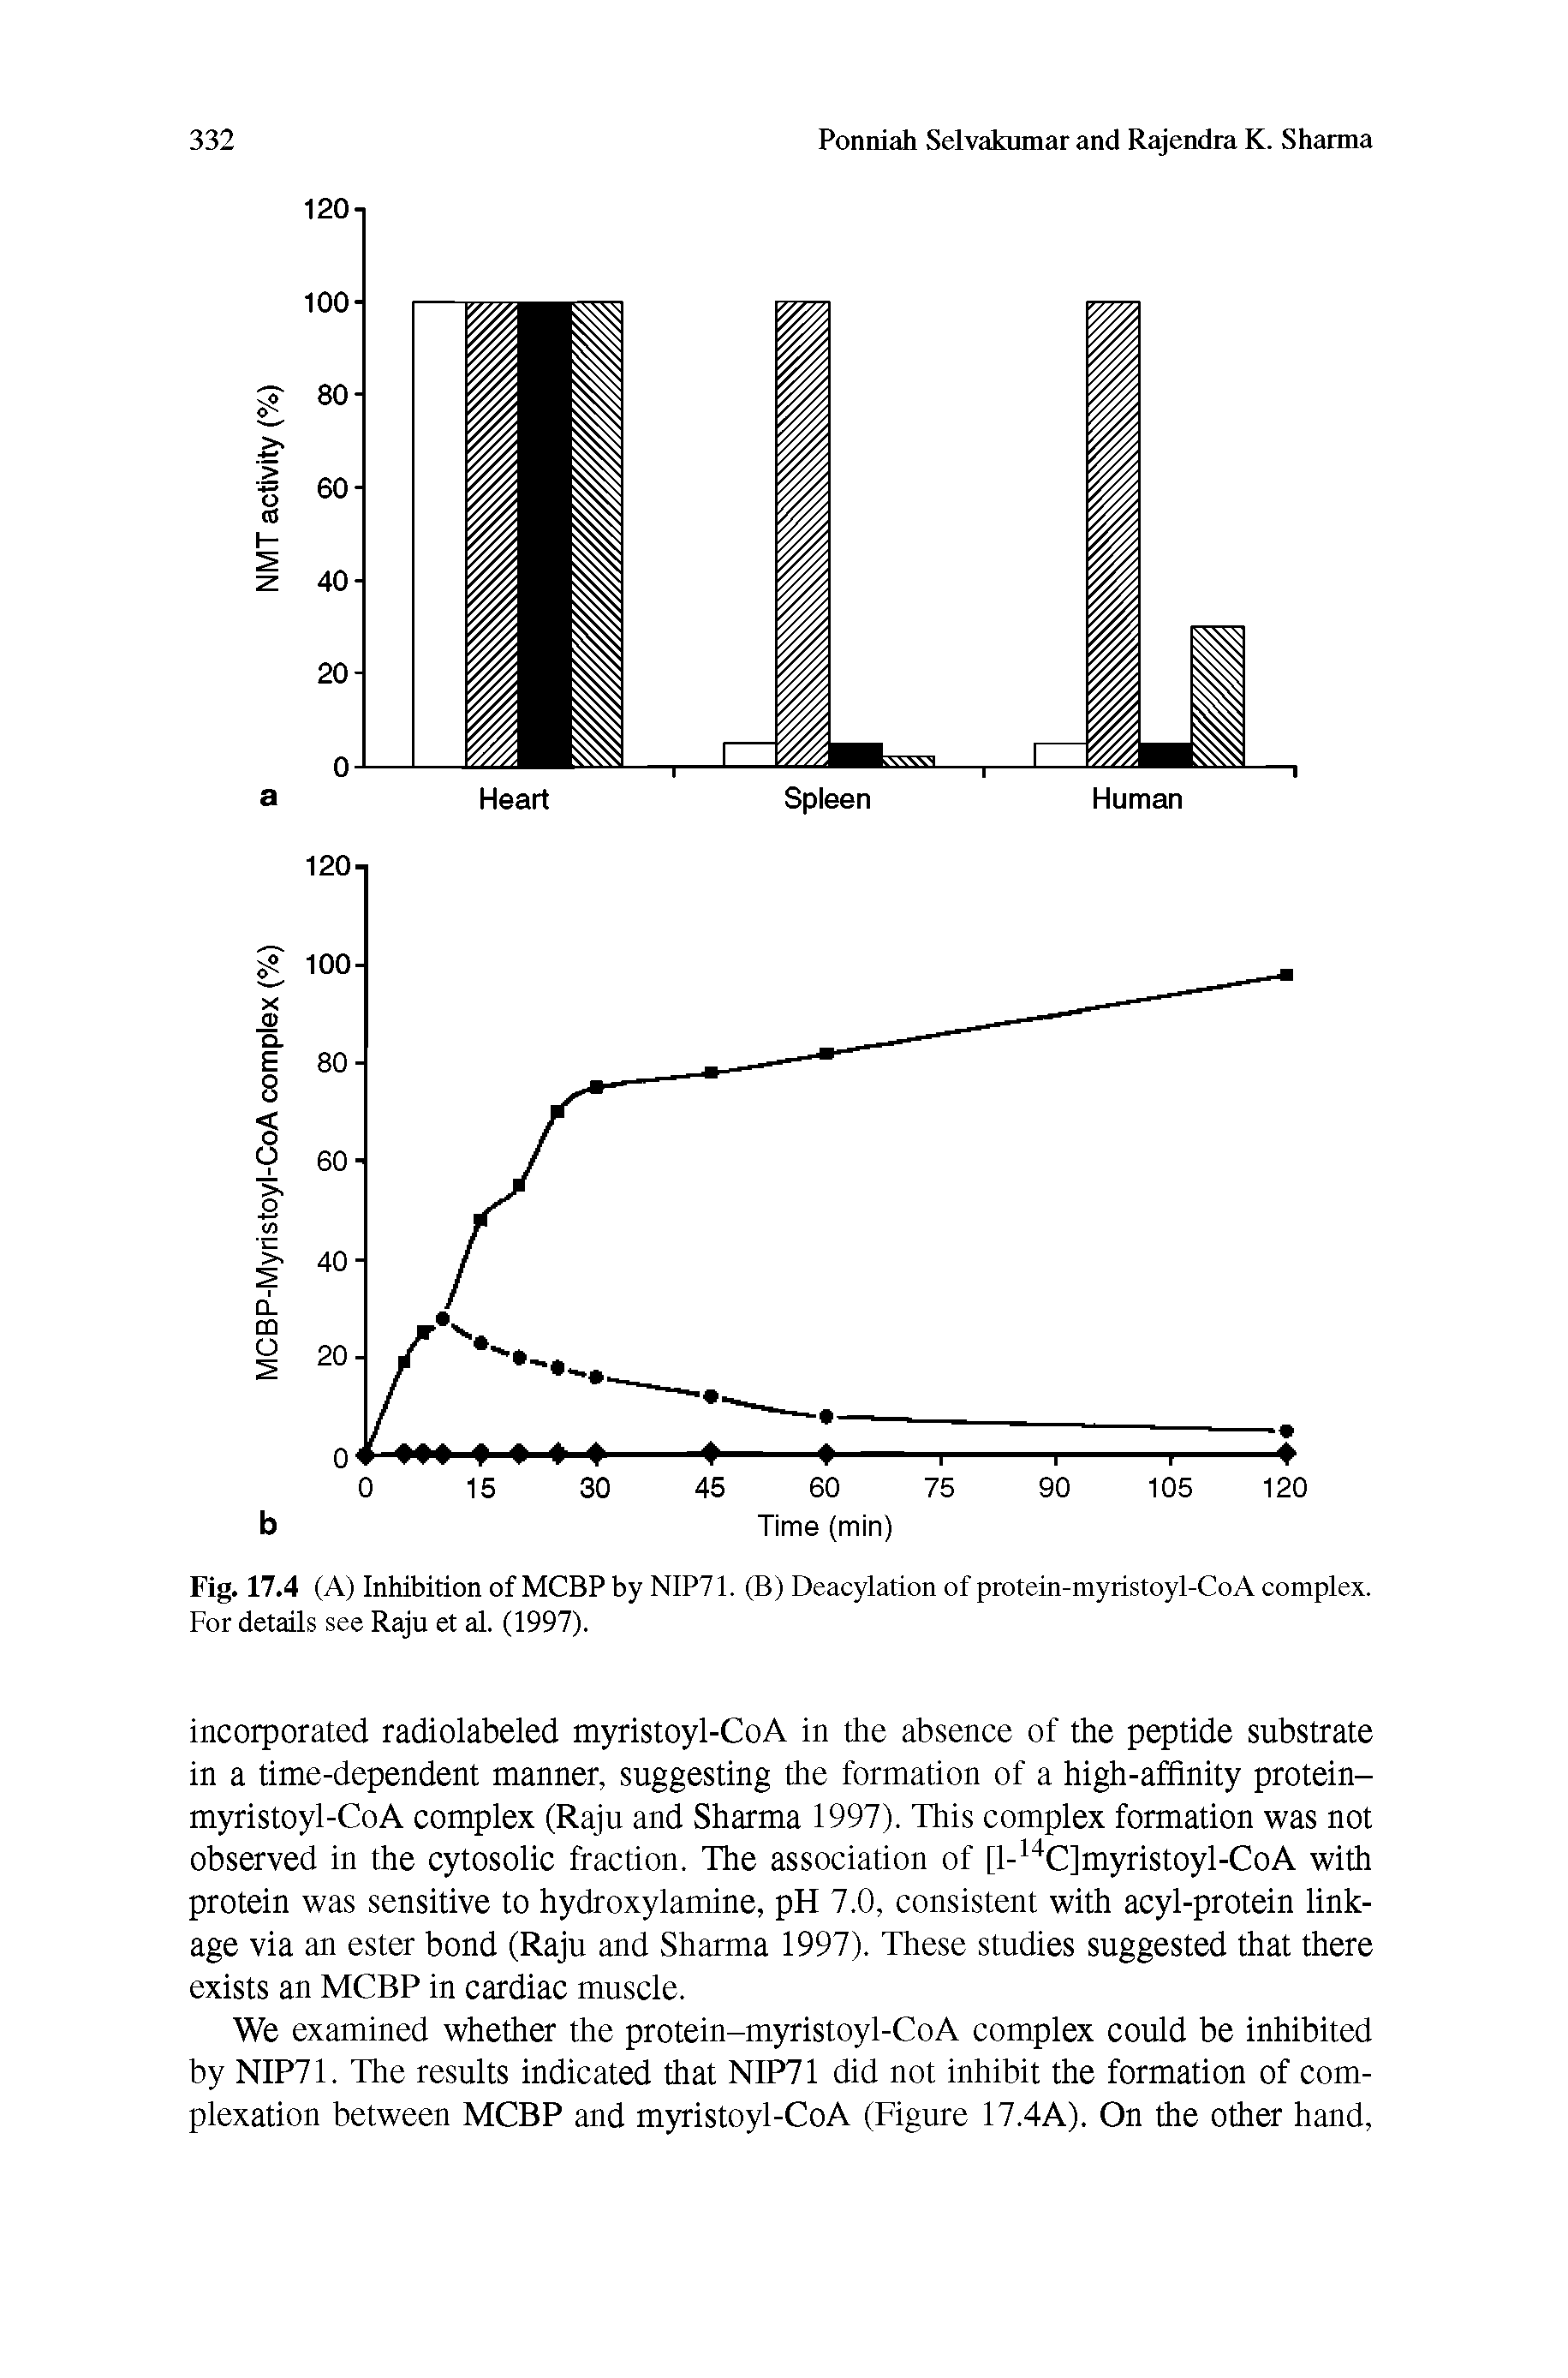 Fig. 17.4 (A) Inhibition of MCBP by NIP71. (B) Deacylation of protein-myristoyl-CoA complex. For details see Raju et al. (1997).